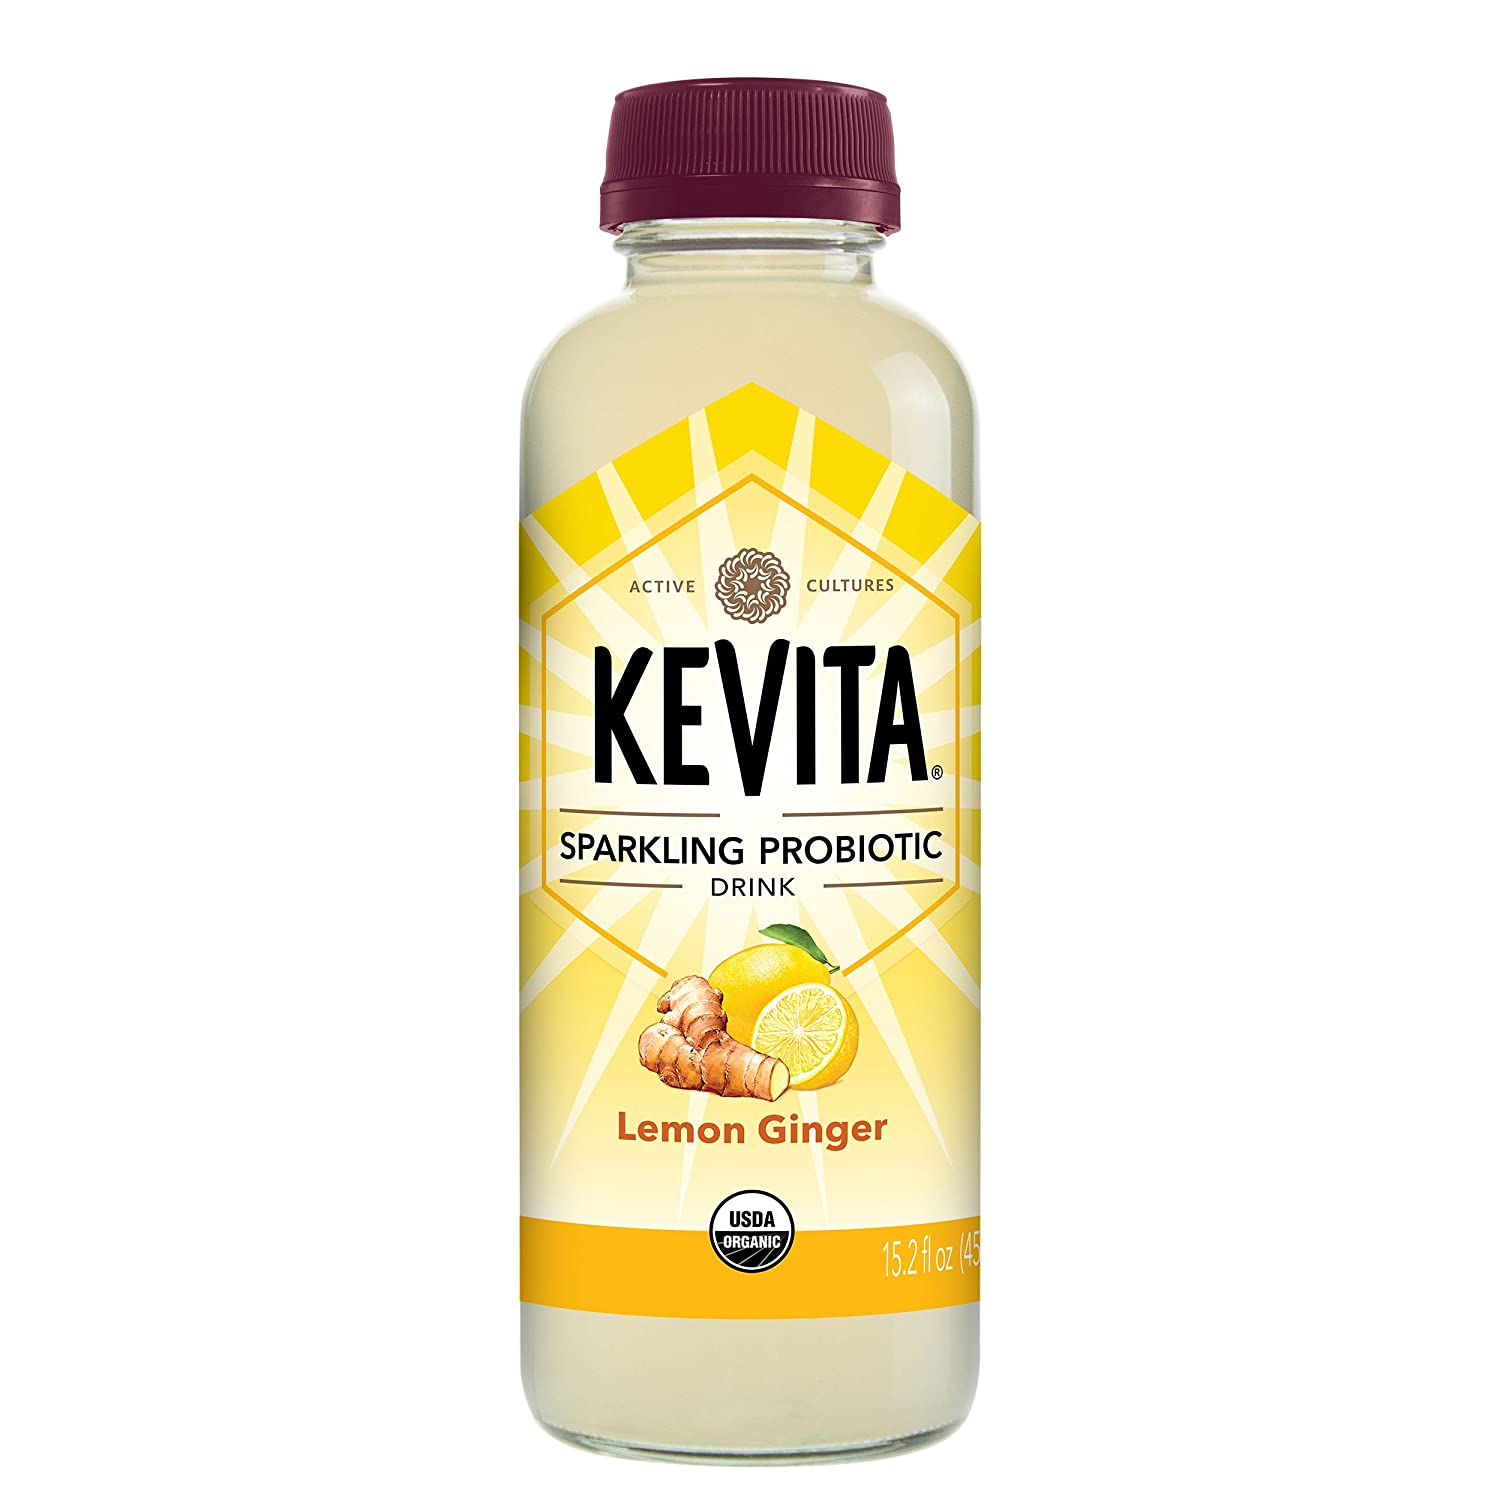 KeVita Probiotic Drink Review